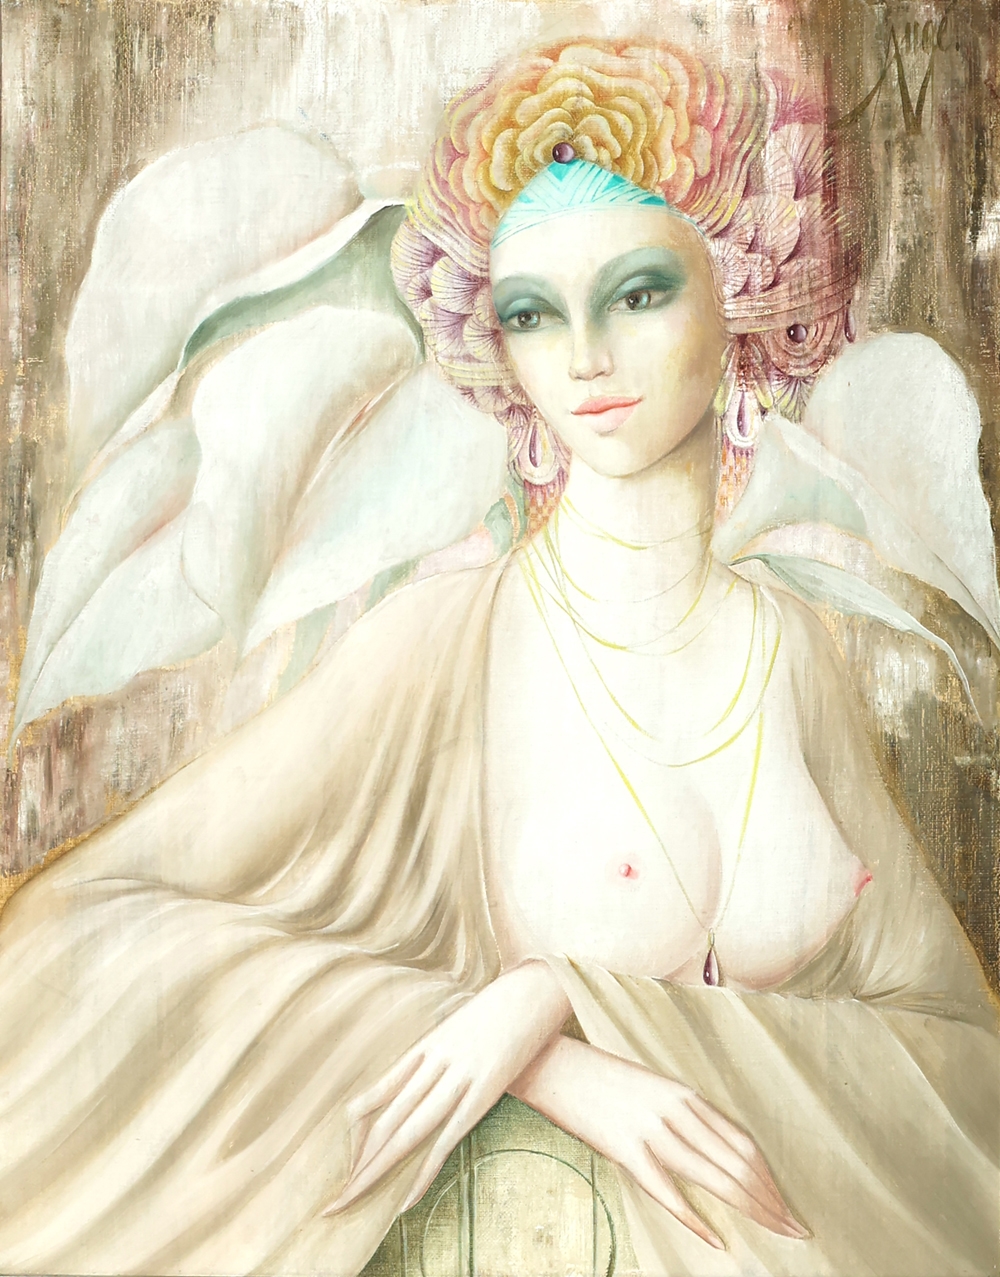 Sold at Auction: Auge - Untitled (Portrait of Woman)